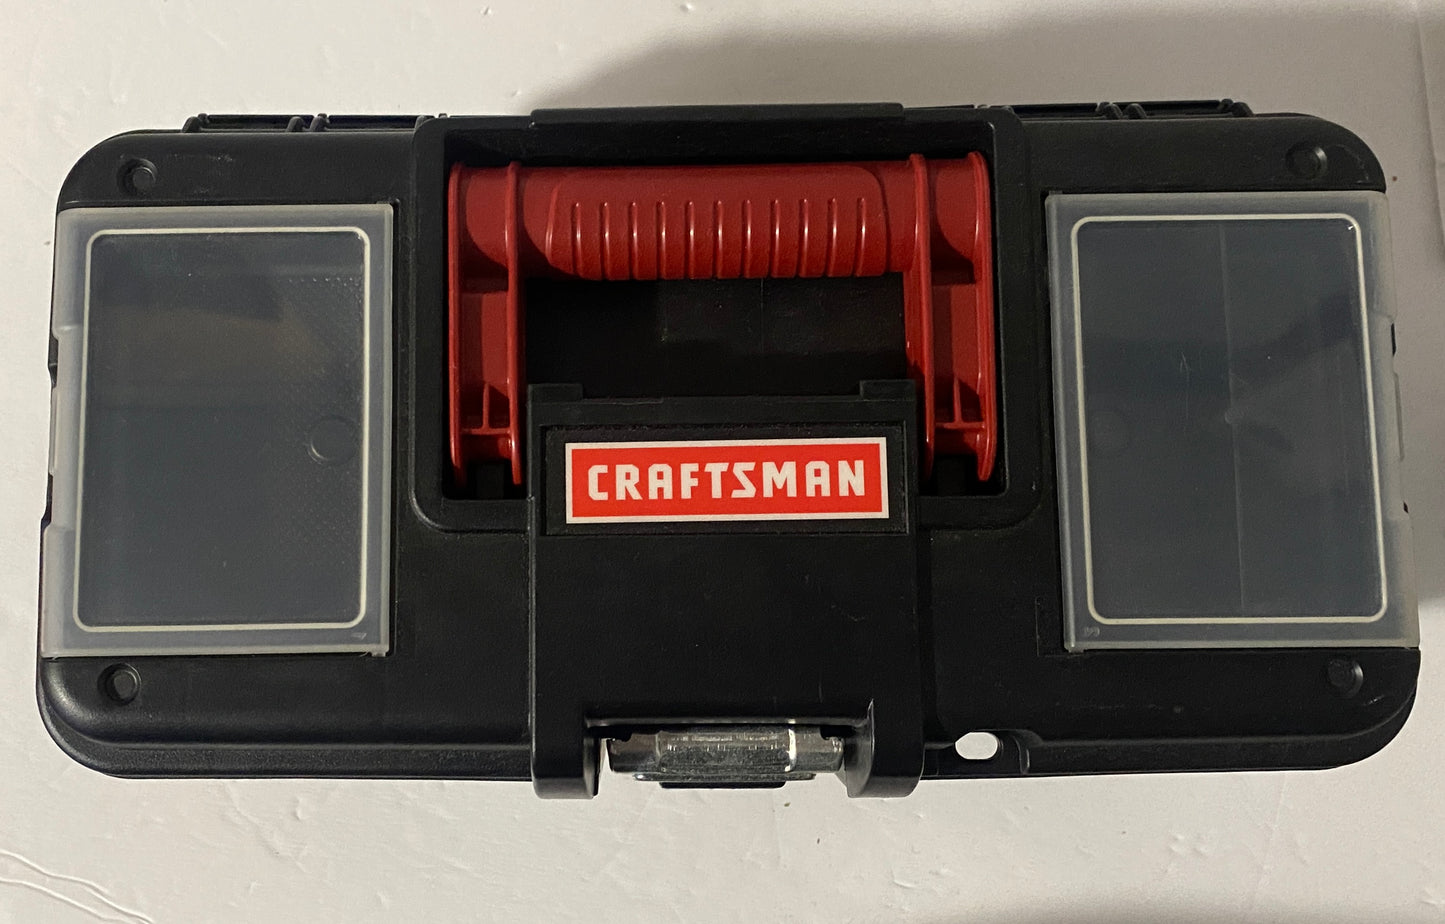 CRAFTSMAN Toolbox, Lockable, 12 in., Red/Black plastic